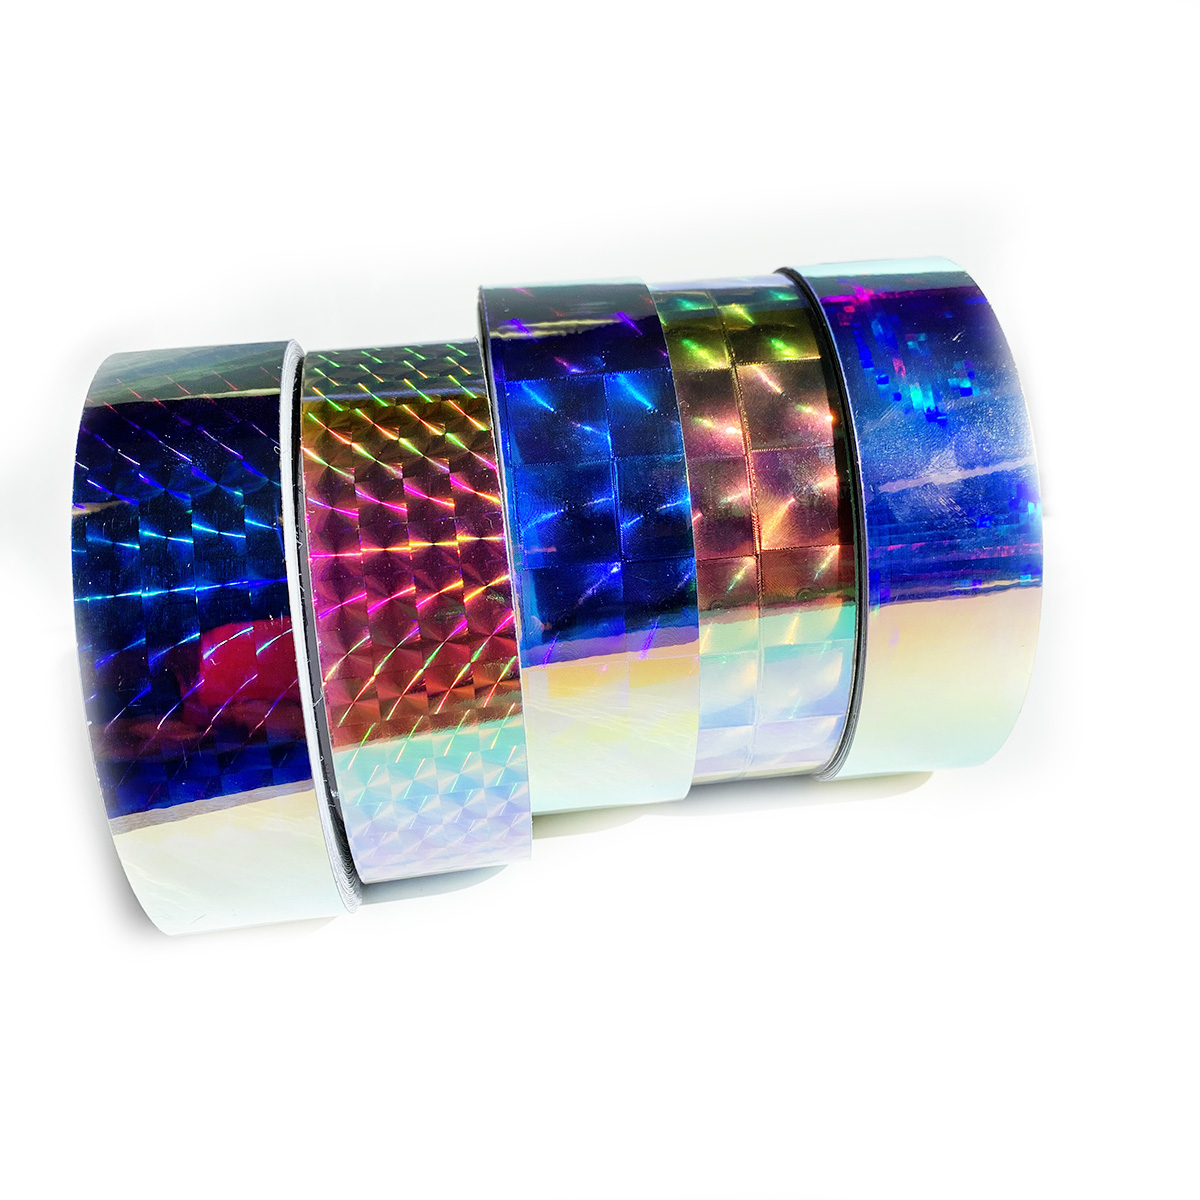 Fire Opal Holographic Tape Collection 5 color bundle - Caribbean, Fire  Opal, Cateye Opal, Snakeeye Opal